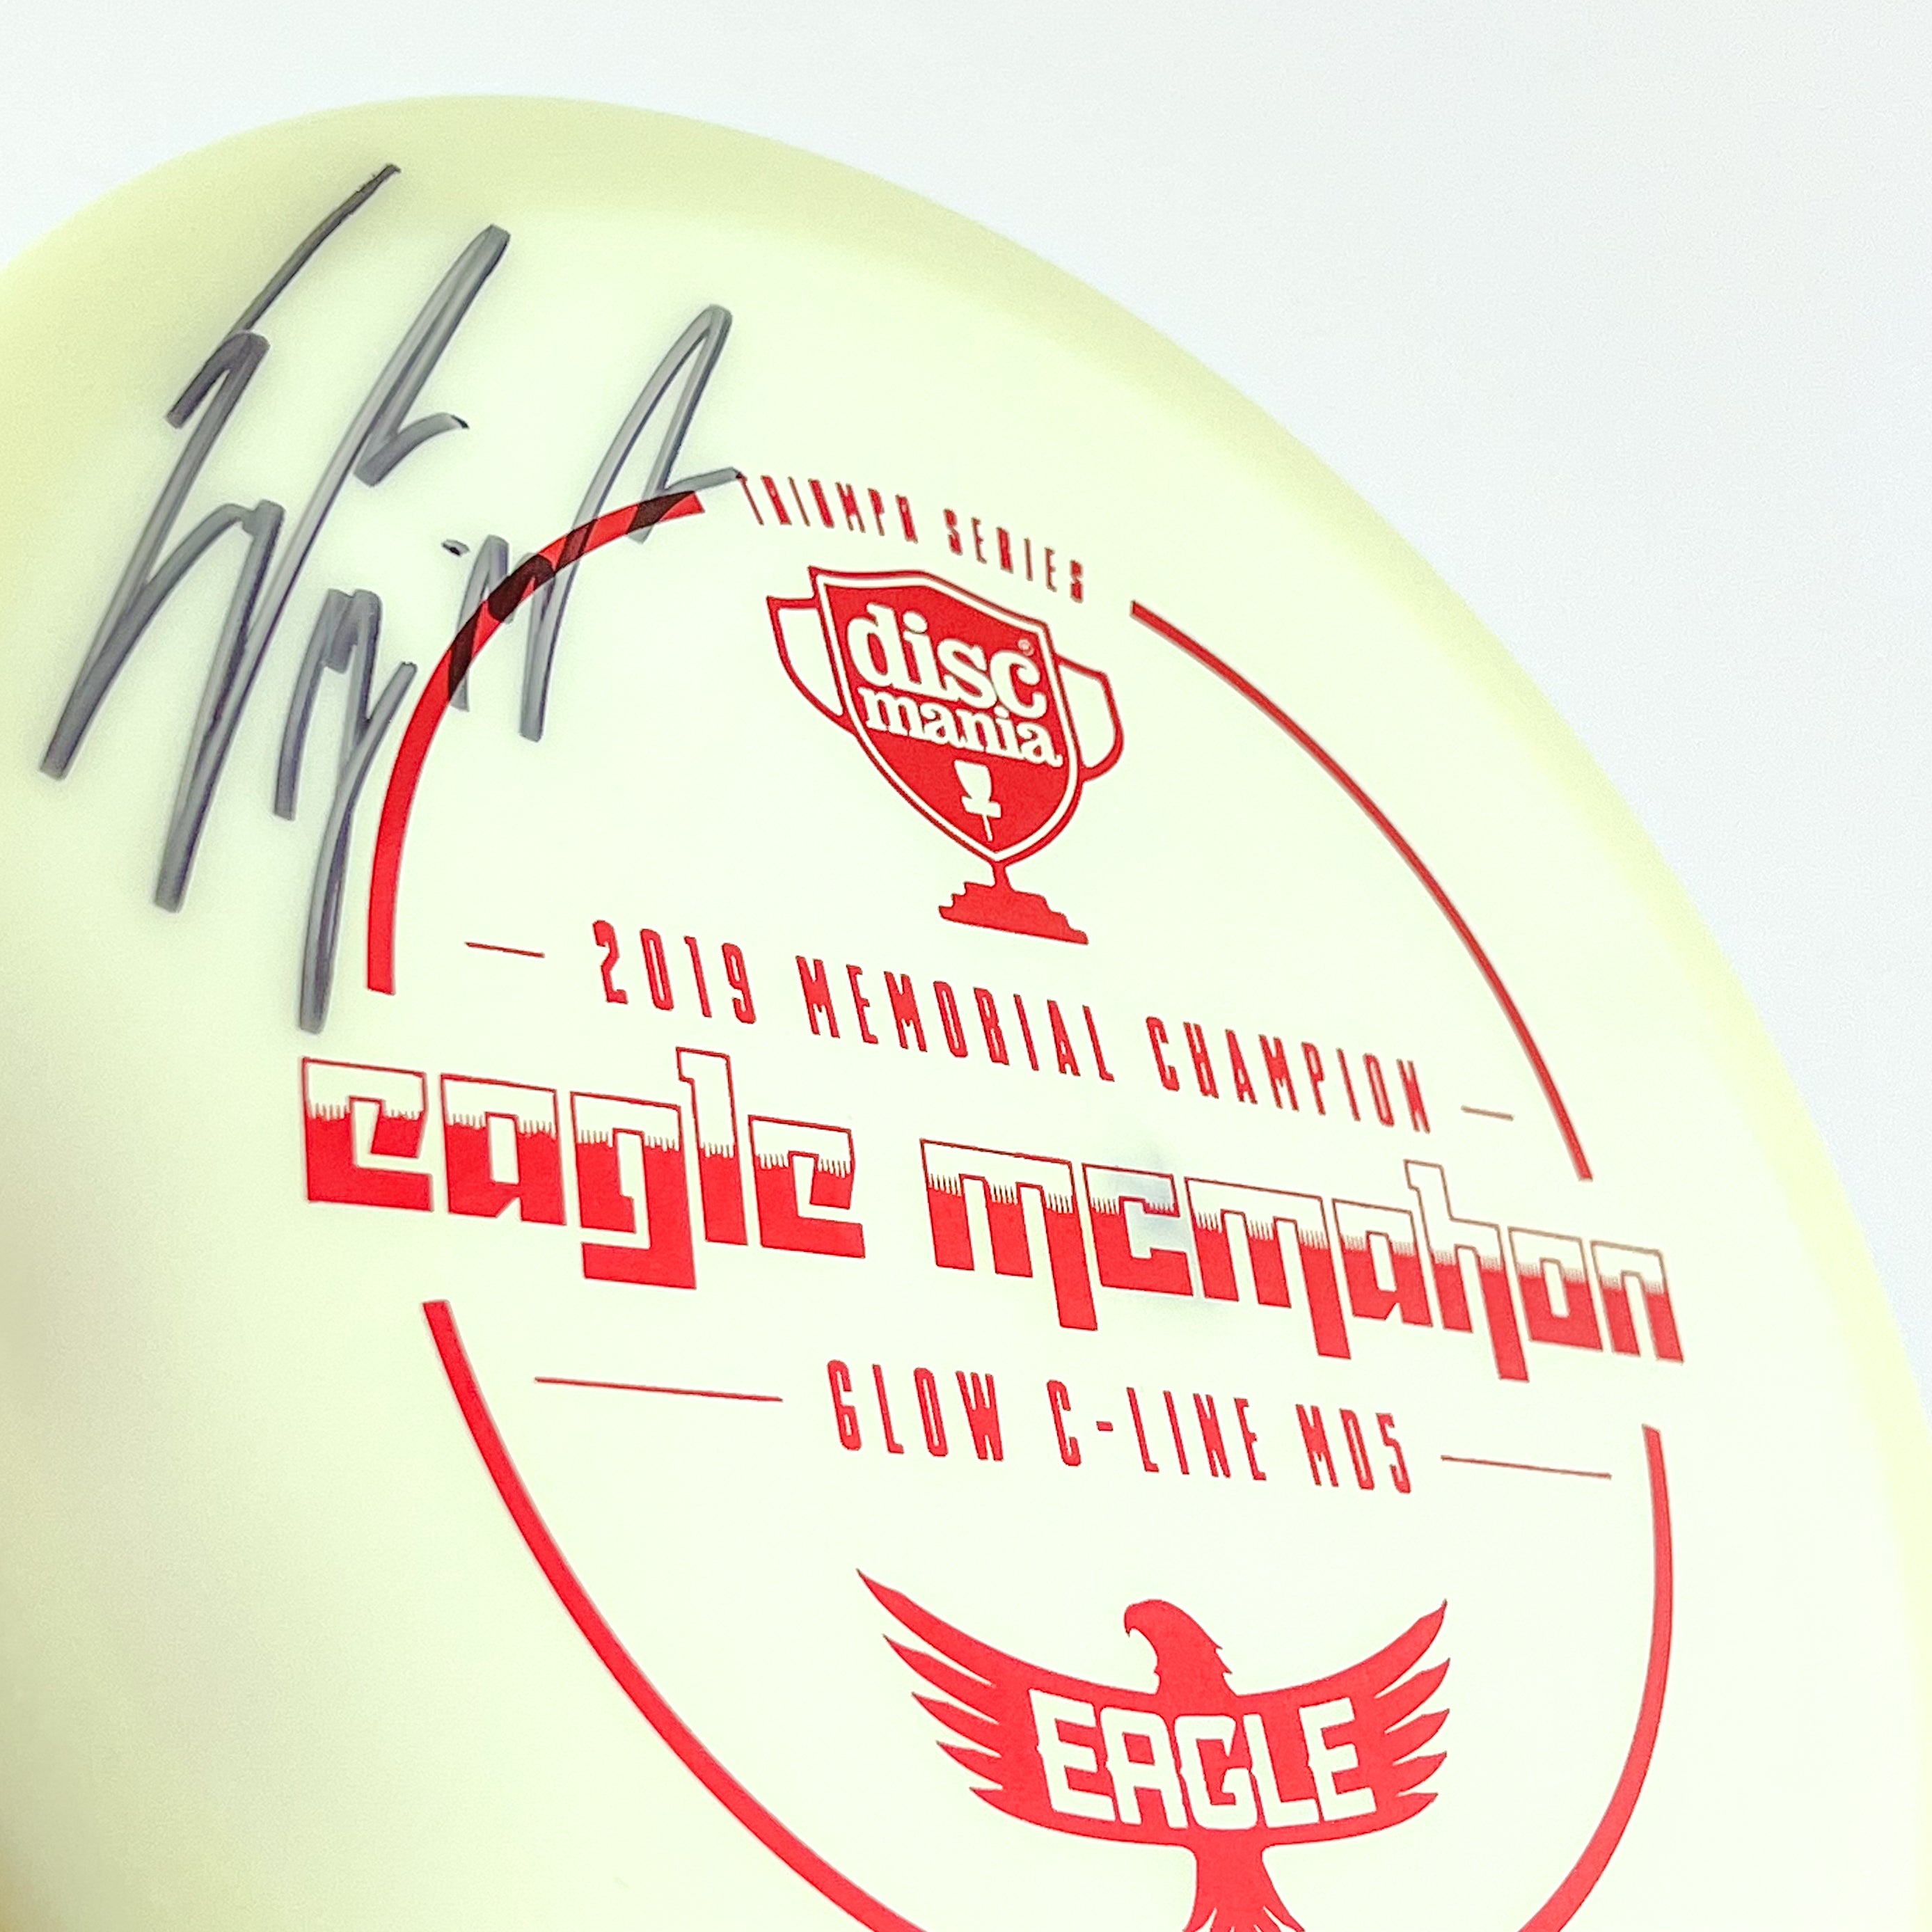 Eagle McMahon signed glow MD5 disc golf midrange disc by Discmania Golf Discs.